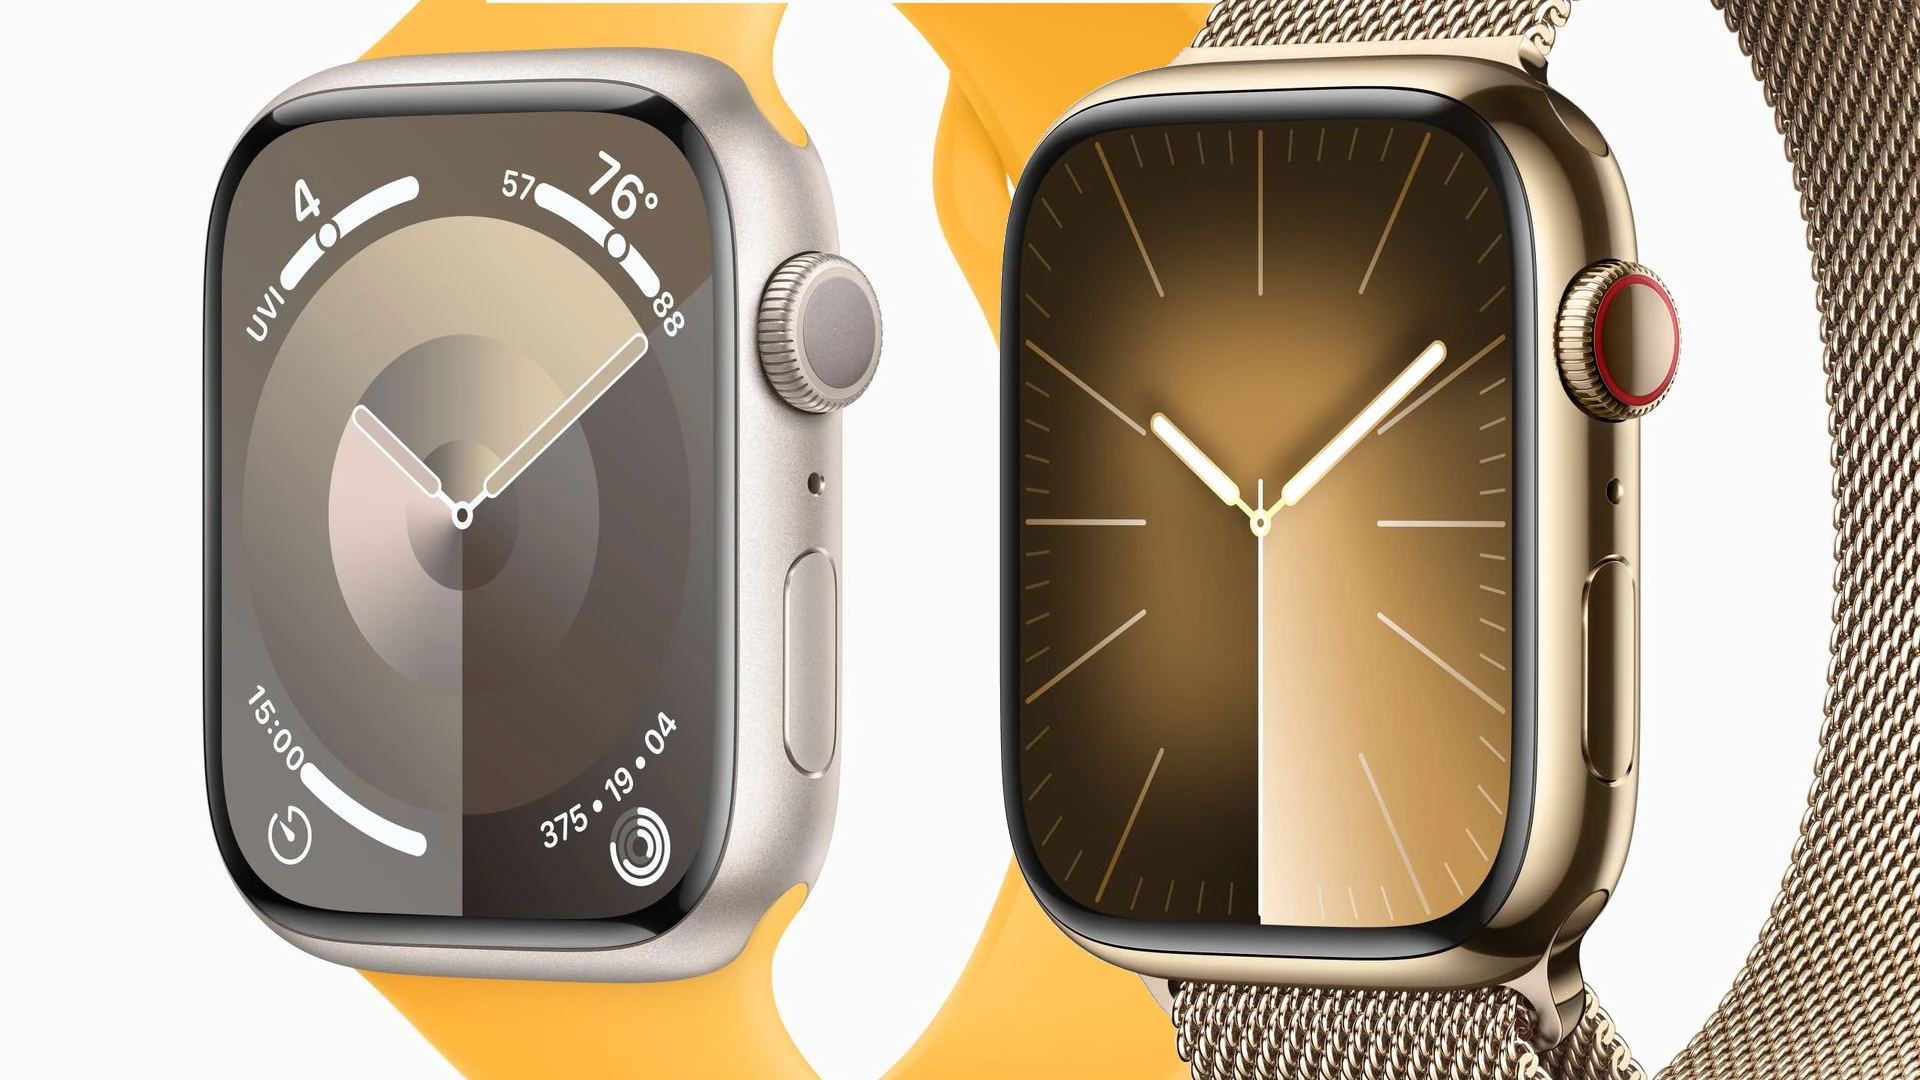 Aluminum vs Stainless Steel Apple Watch